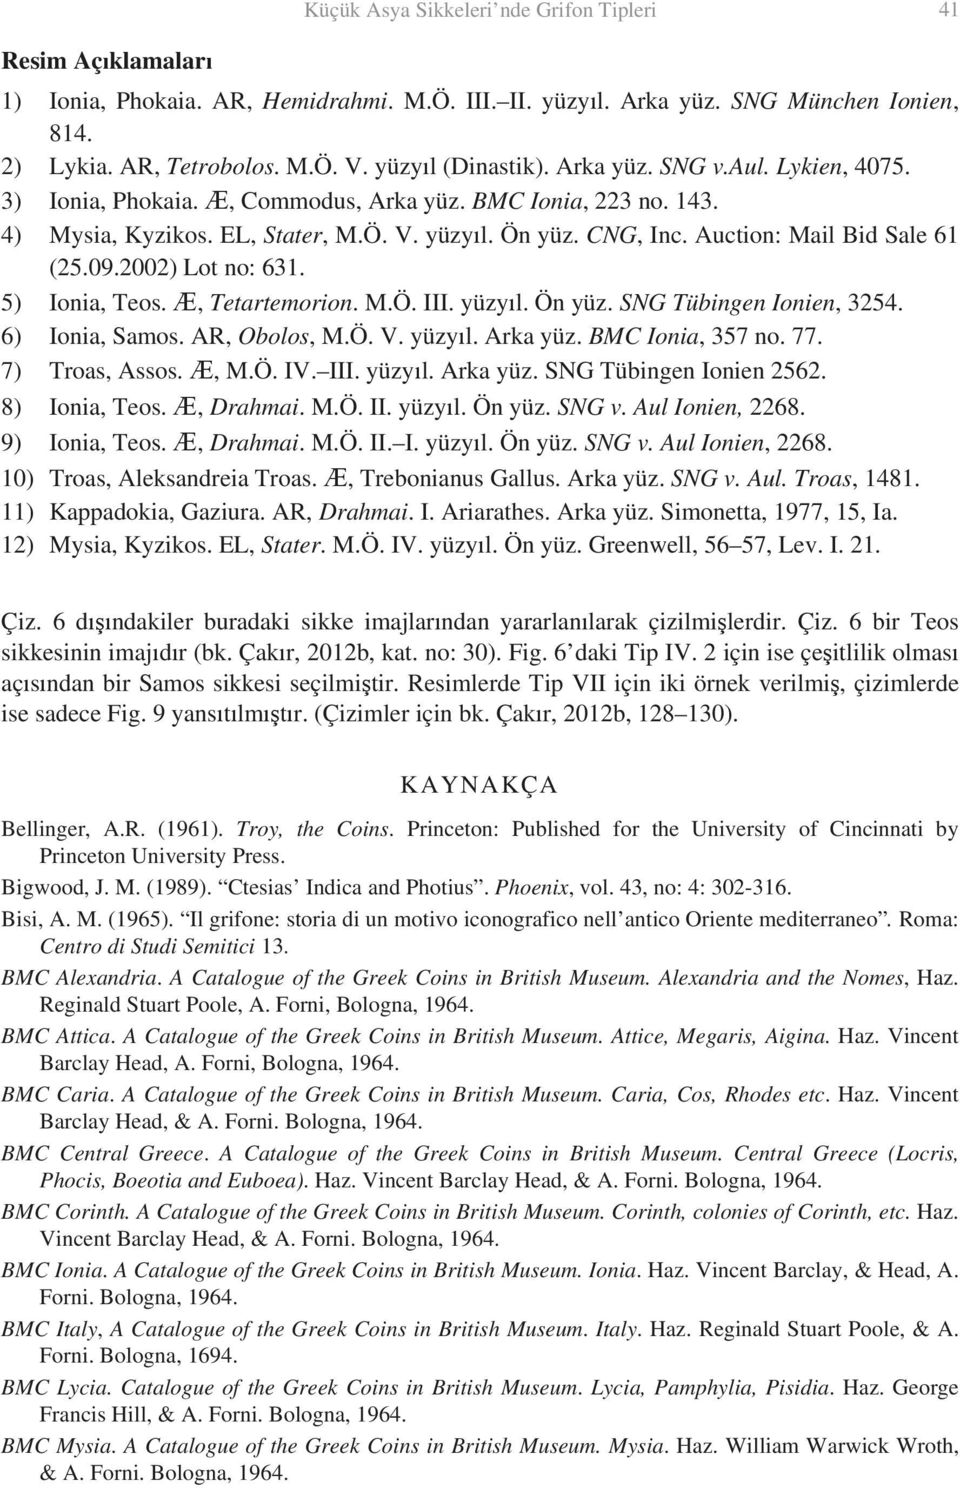 2002) Lot no: 631. 5) Ionia, Teos., Tetartemorion. M.Ö. III.. Ön yüz. SNG Tübingen Ionien, 3254. 6) Ionia, Samos. AR, Obolos, M.Ö. V.. Arka yüz. BMC Ionia, 357 no. 77. 7) Troas, Assos., M.Ö. IV. III.. Arka yüz. SNG Tübingen Ionien 2562.